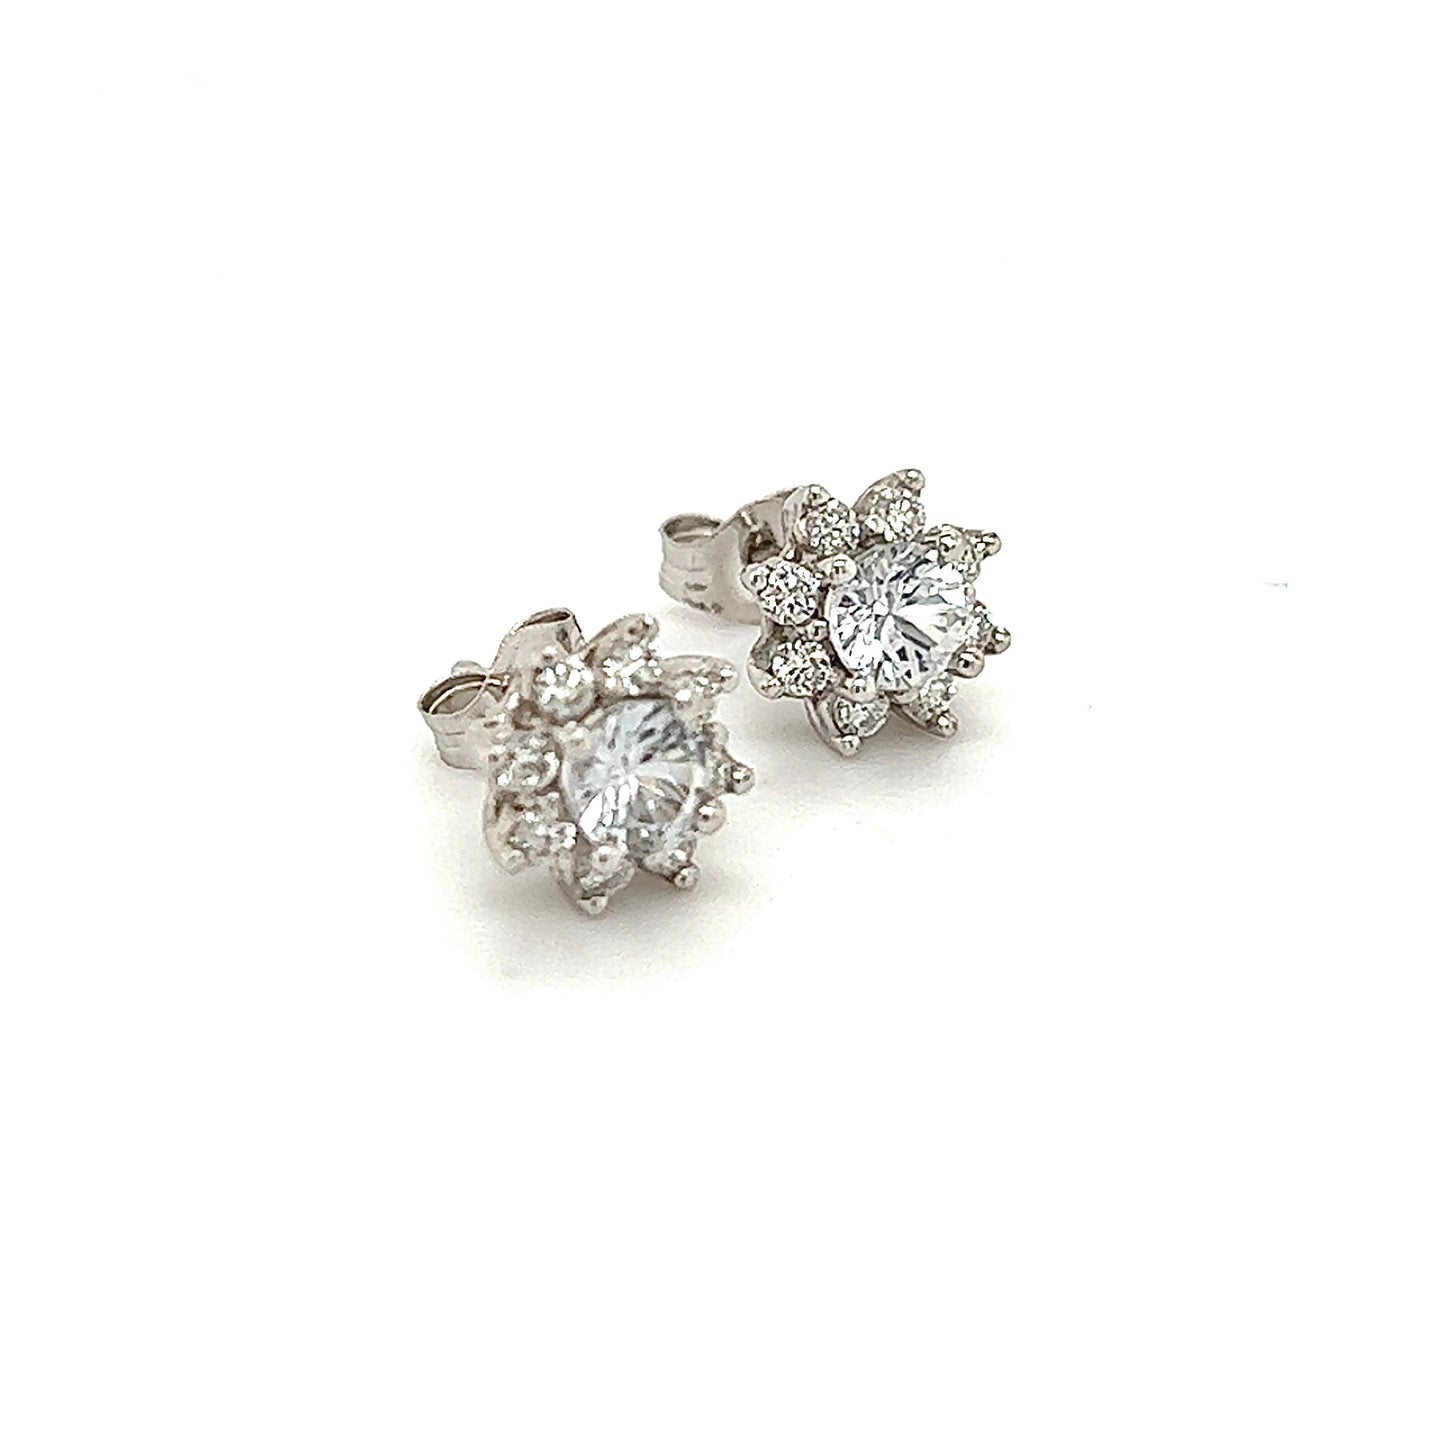 Natural Sapphire Diamond Halo Stud Earrings 14k Gold 1.02 TCW Certified $3,950 121426